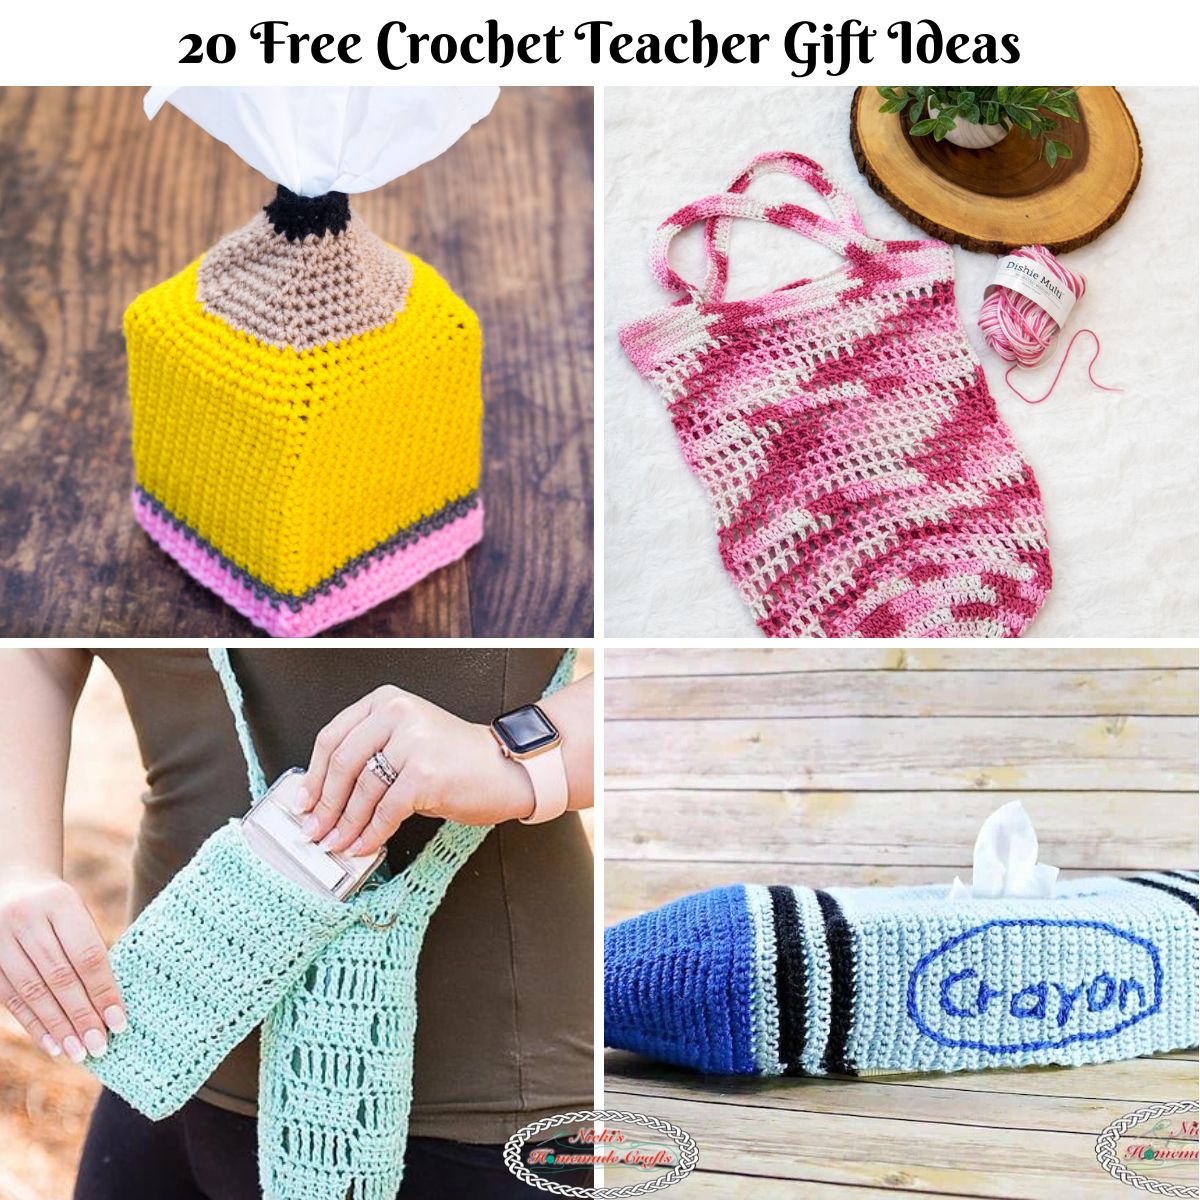 Teacher Appreciation Gift Ideas | Kim Byers